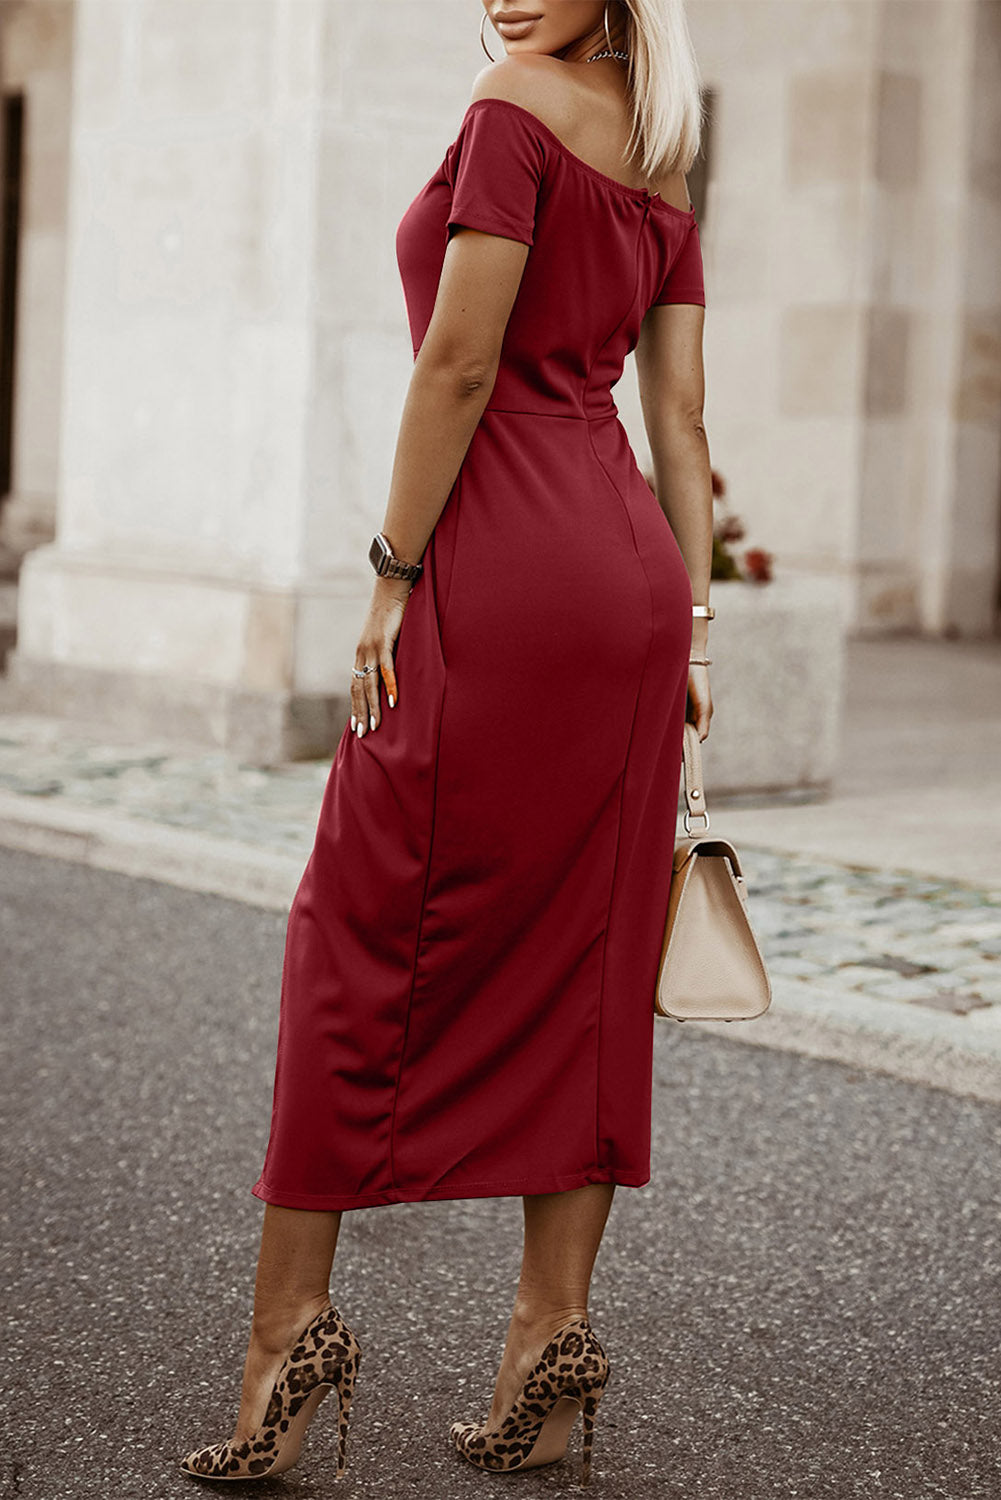 TEEK - Off-Shoulder Short Sleeve Split Dress DRESS TEEK Trend   